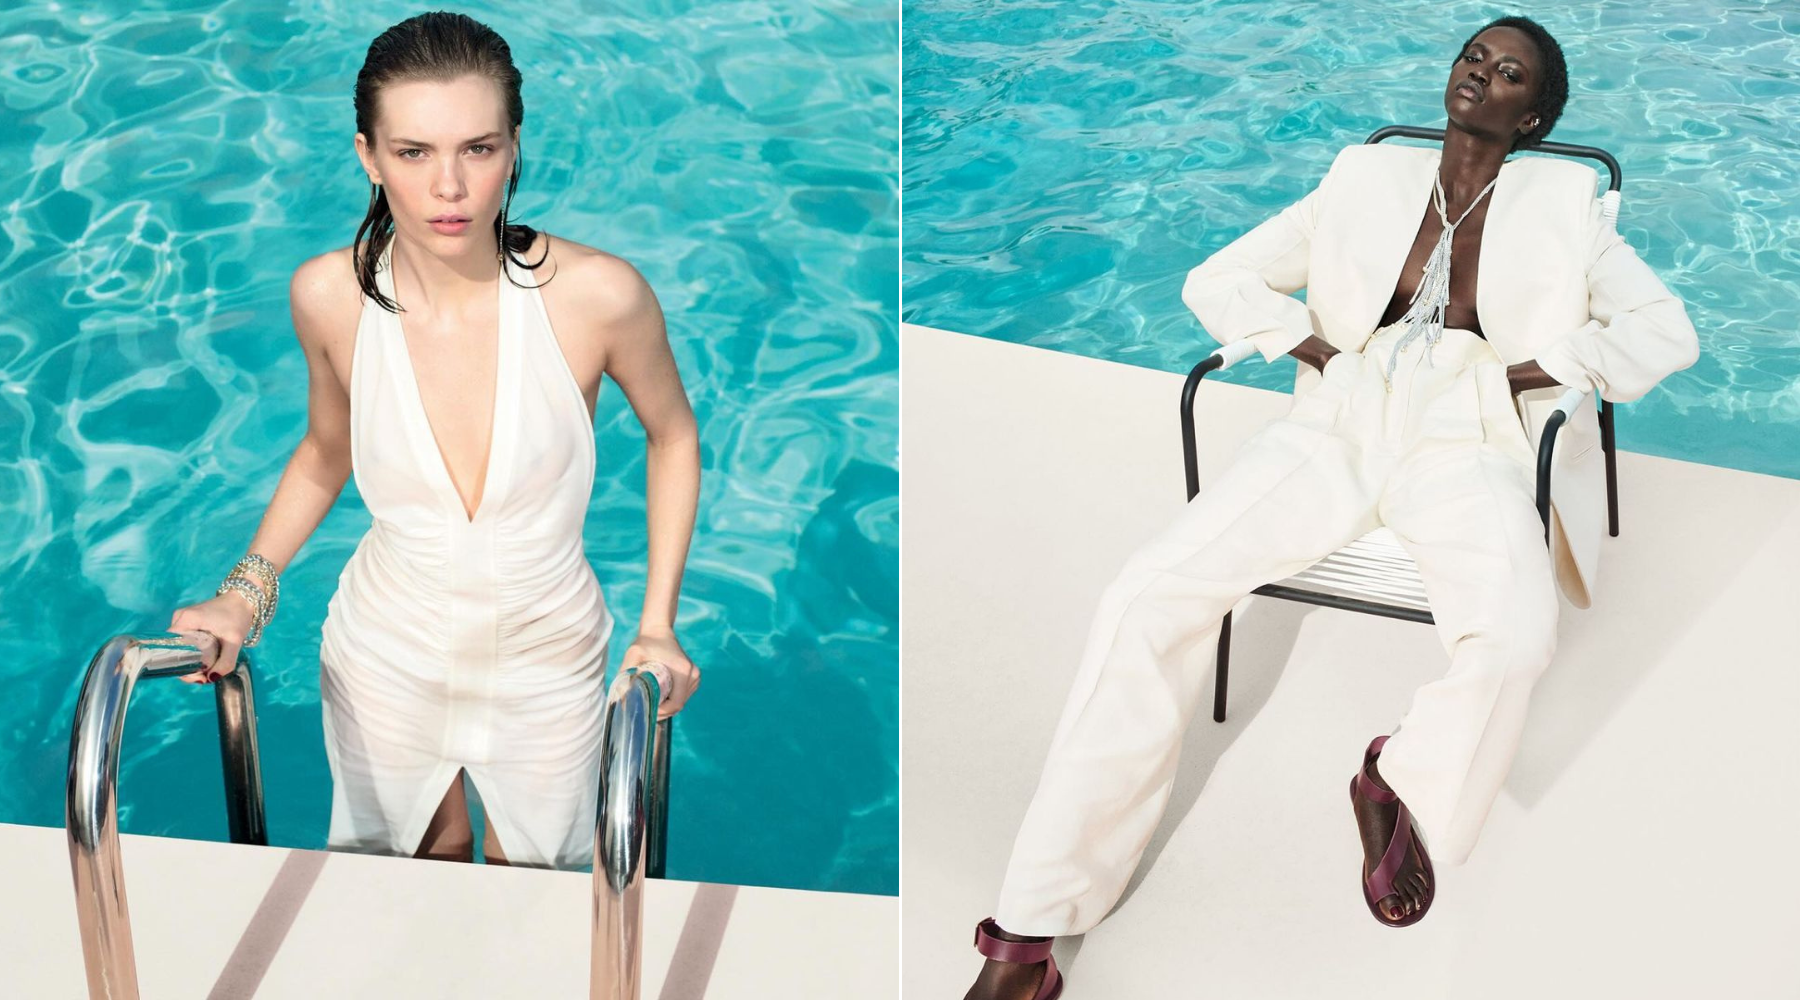 Novo modno sodelovanje! Modna ikona Victoria Beckham se podpisuje pod novo kolekcijo Mango